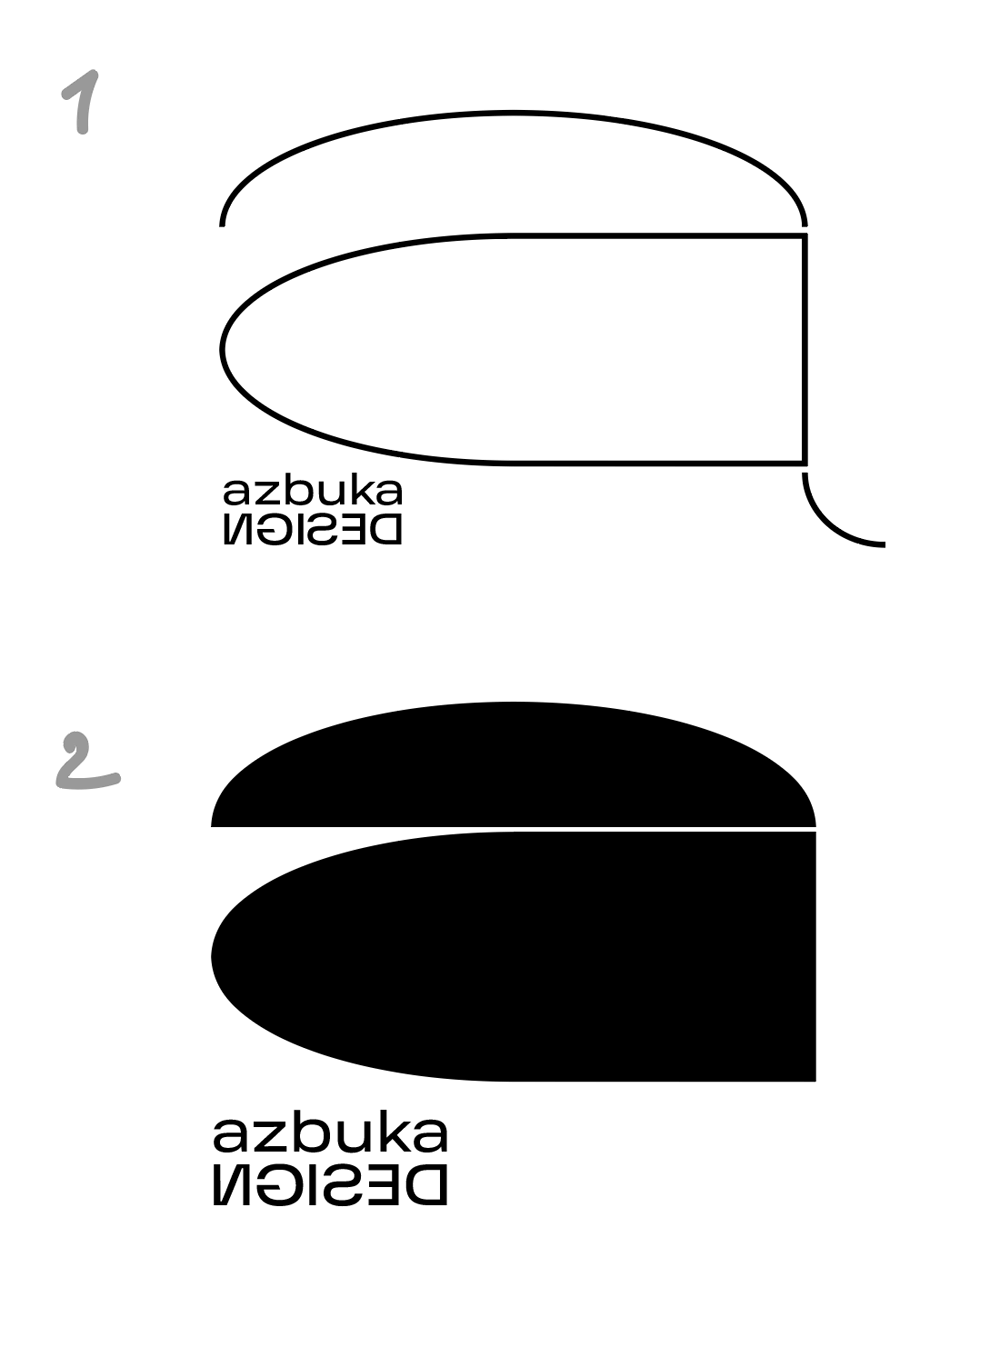 azbuka design process 09